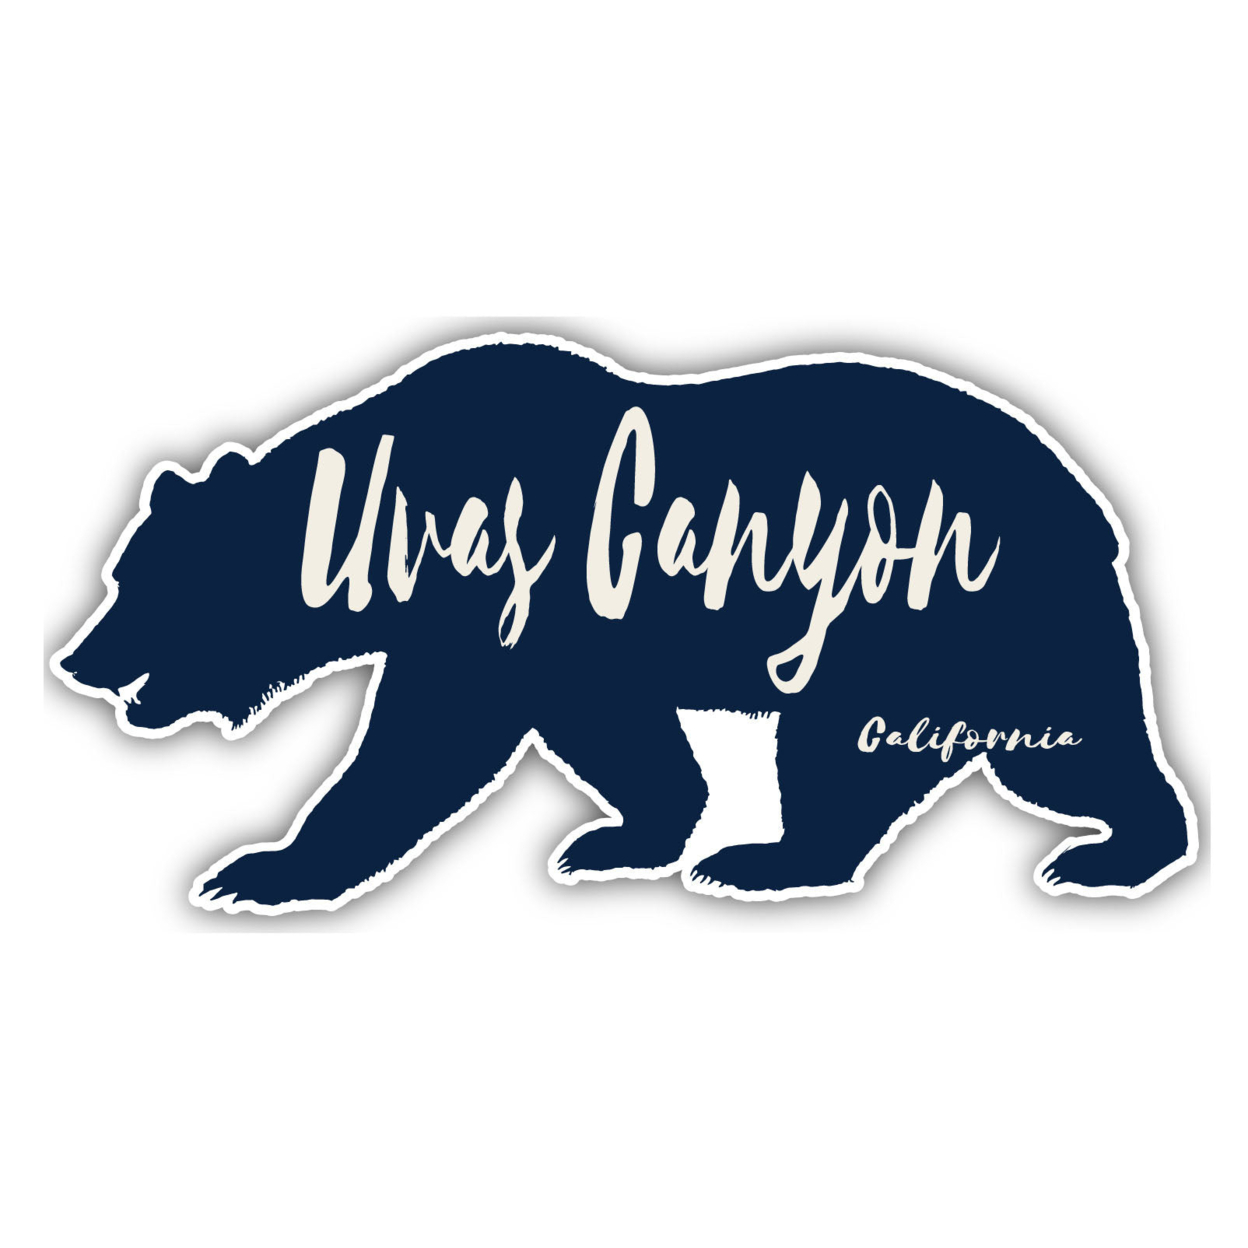 Uvas Canyon California Souvenir Decorative Stickers (Choose Theme And Size) - Single Unit, 2-Inch, Bear